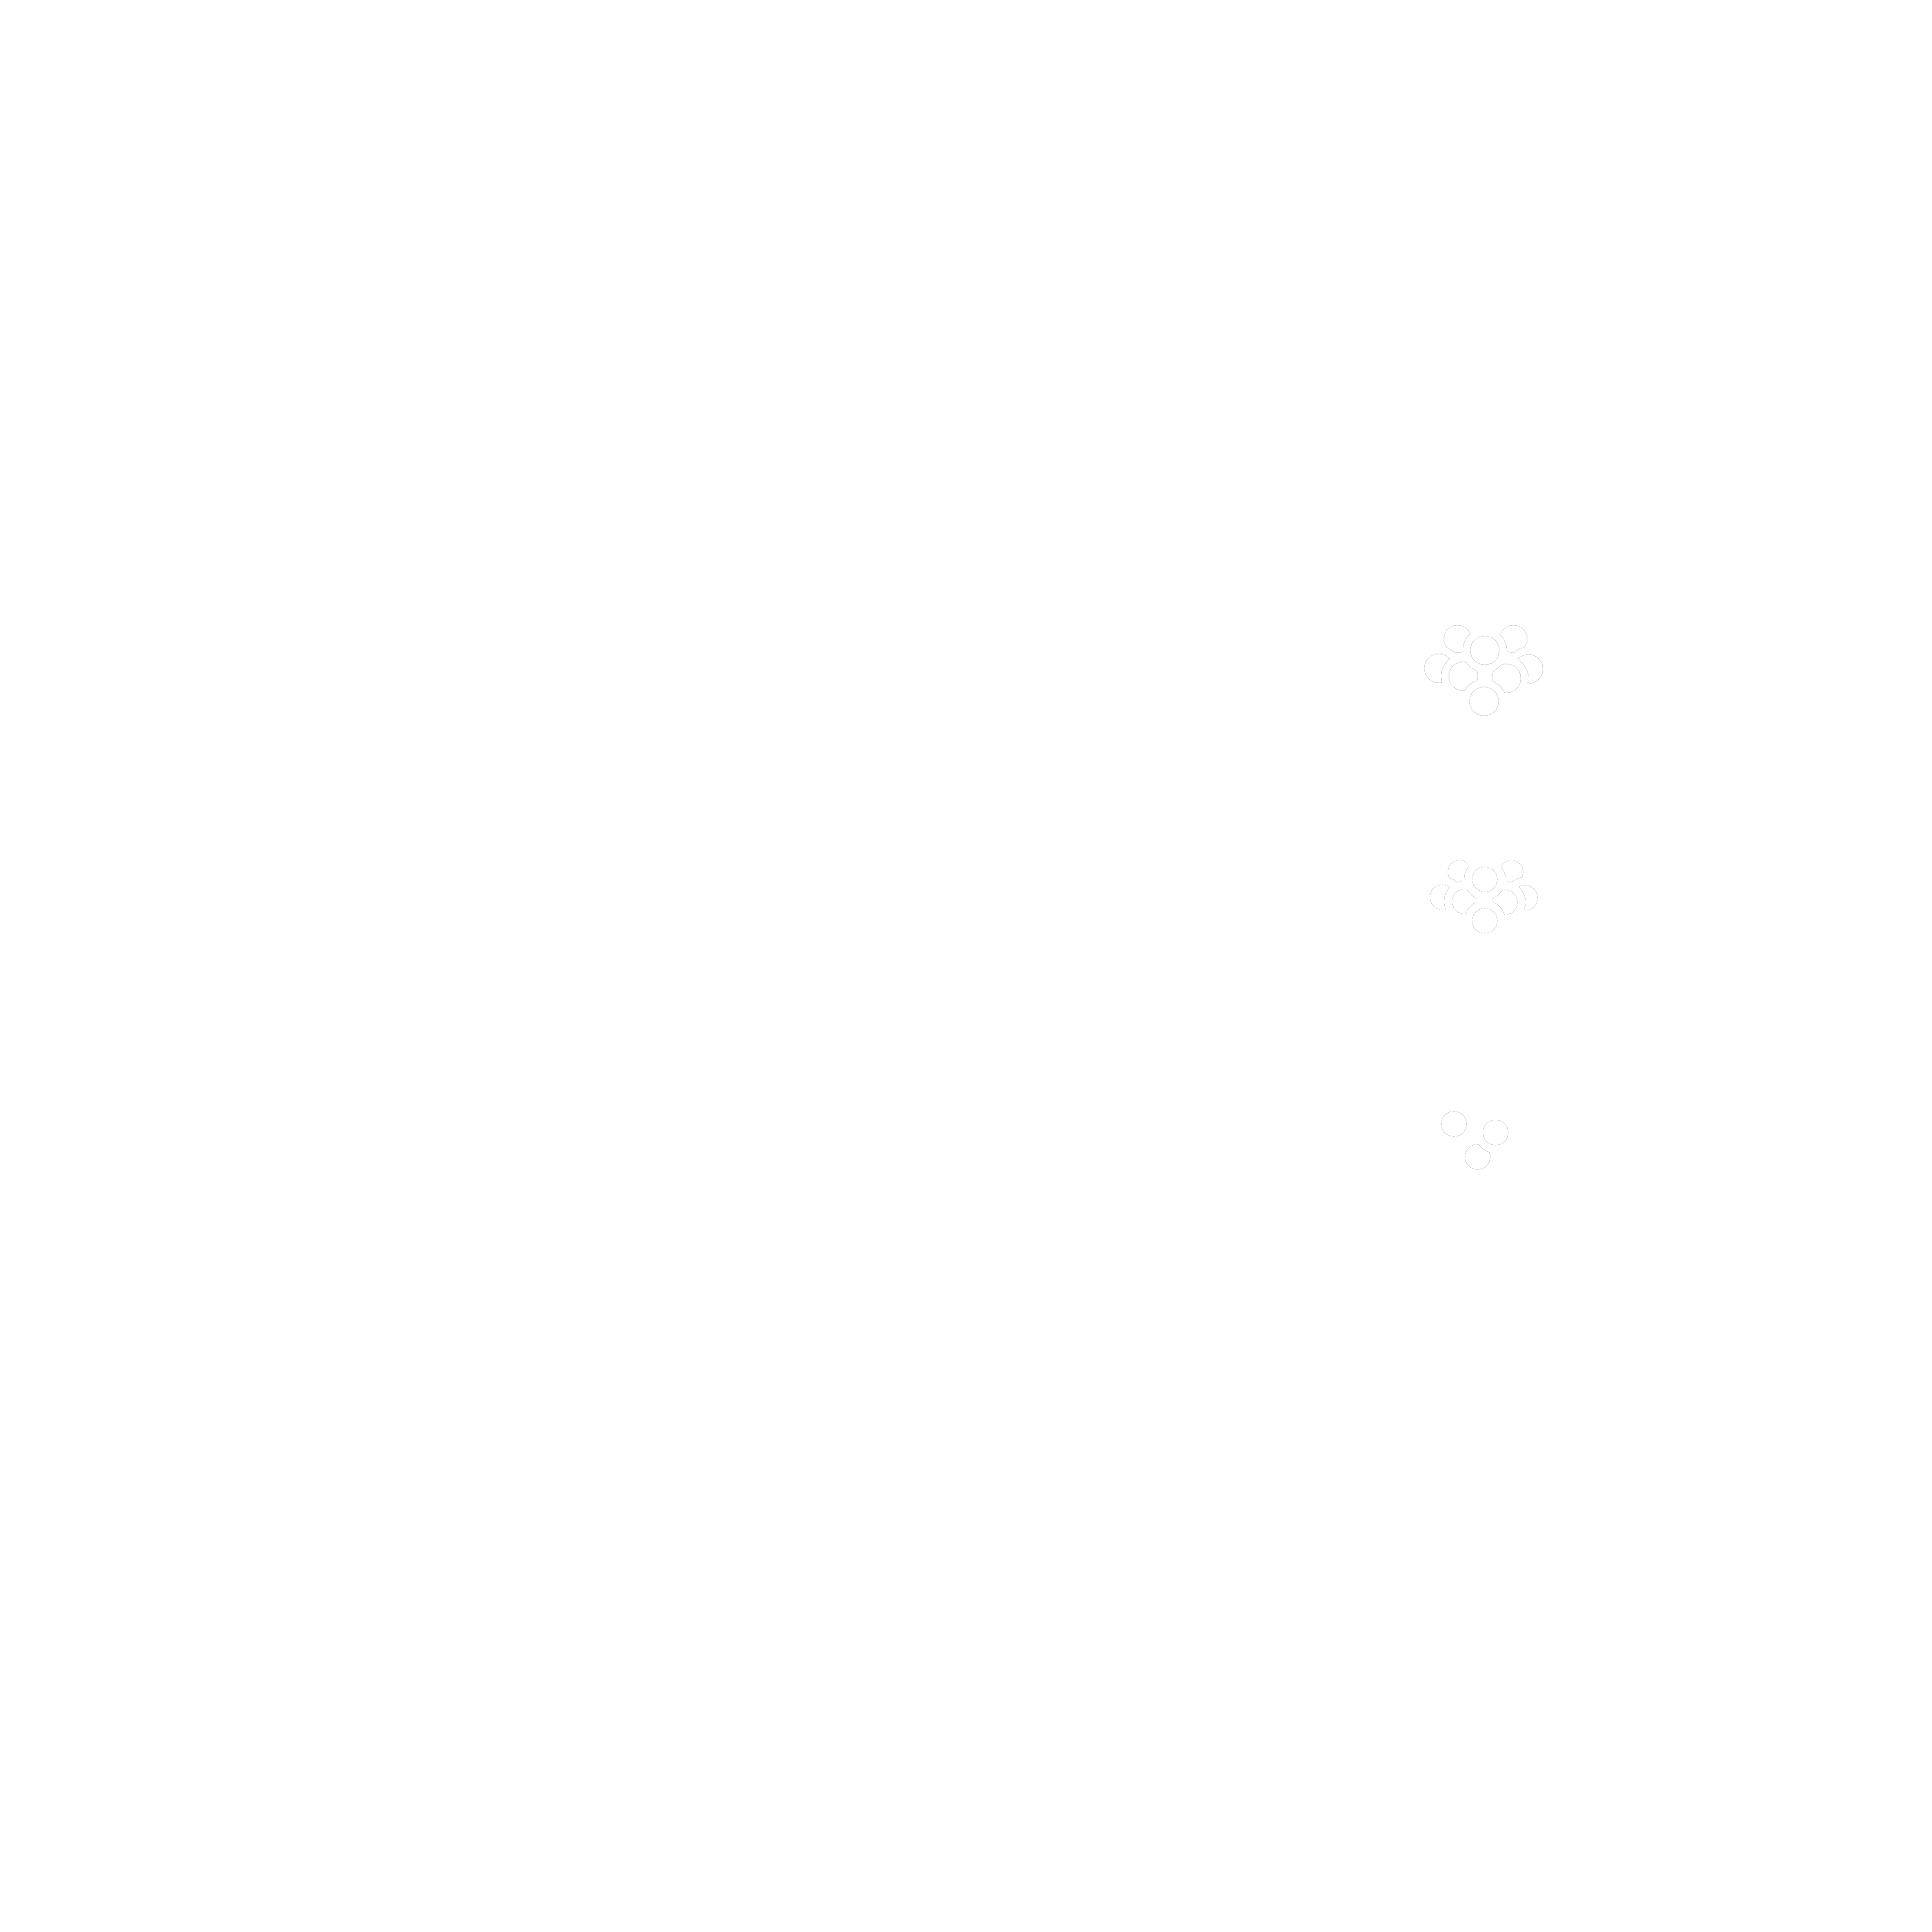 Alcaldia Municipal de Candelaria de la Frontera